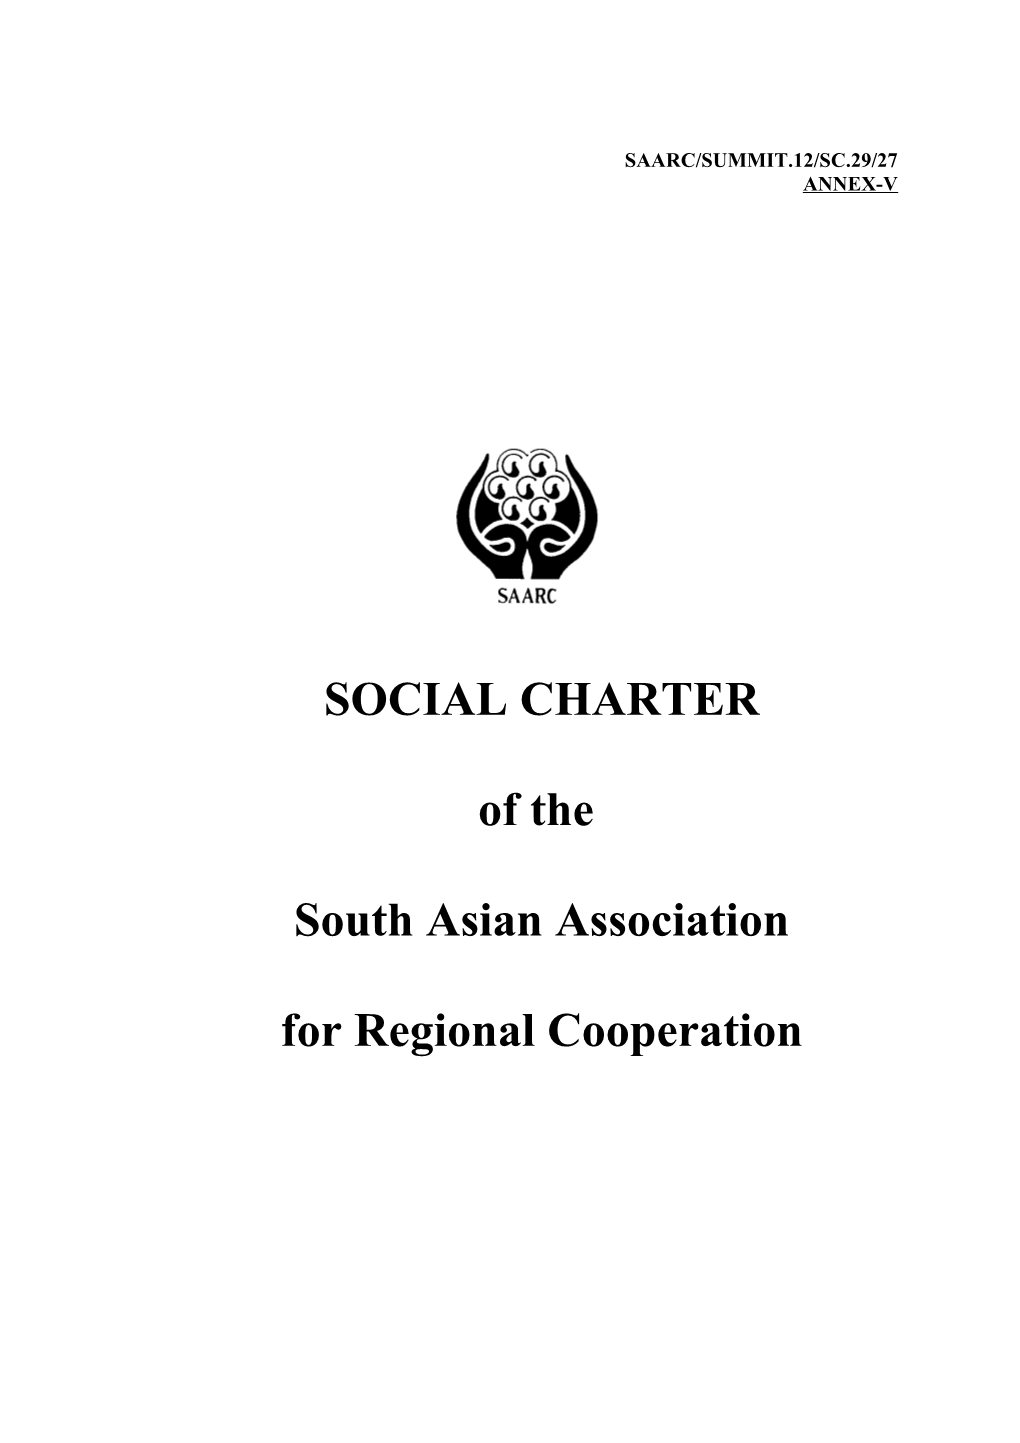 Draft Social Charter